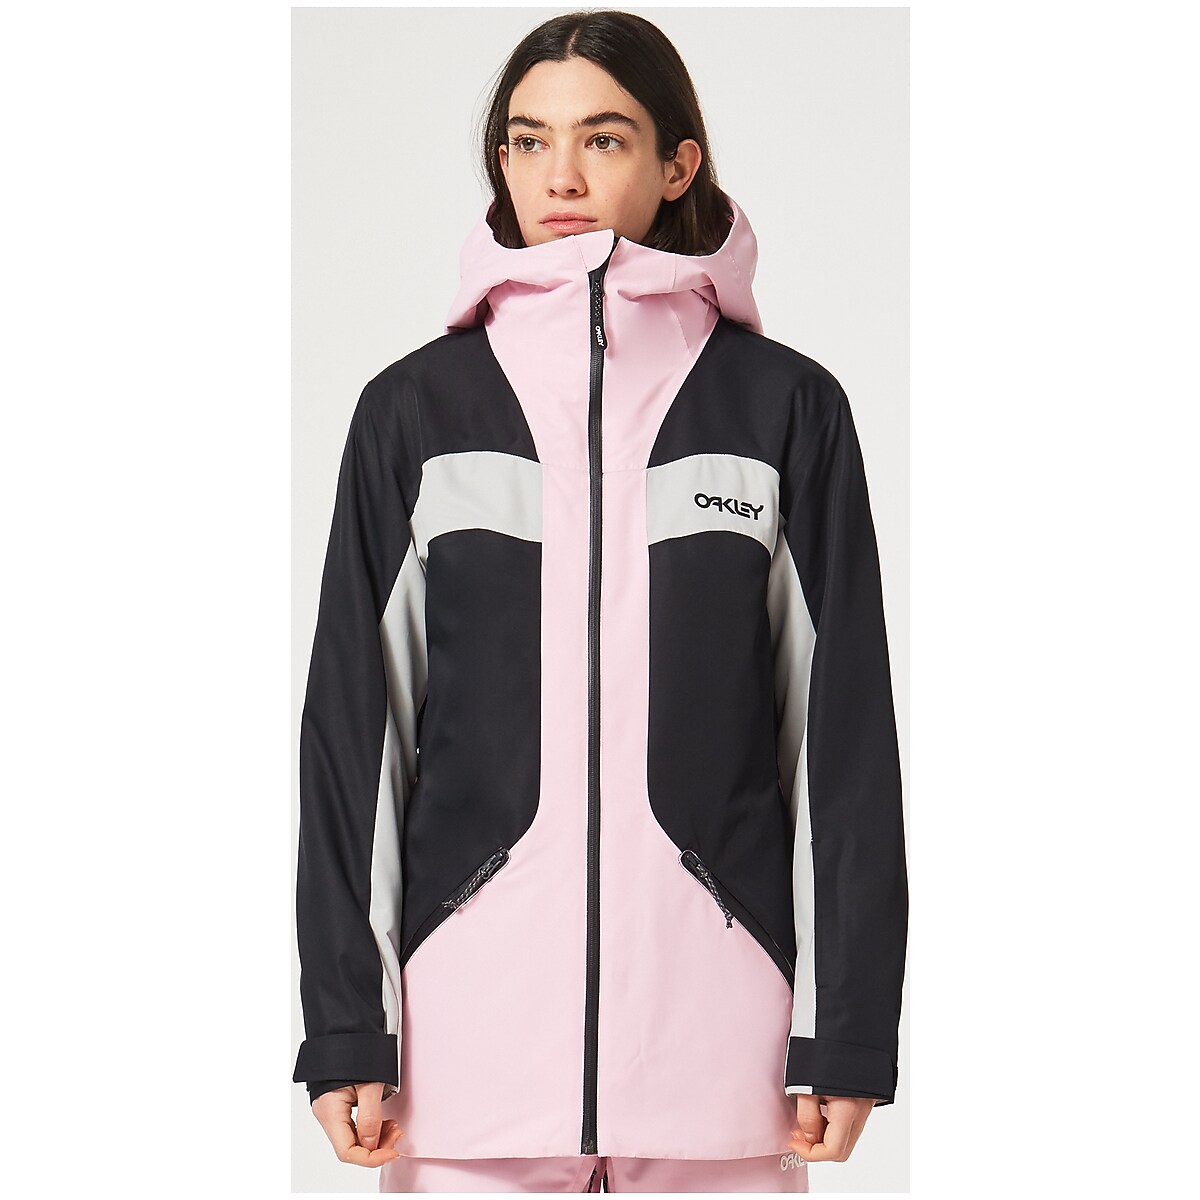 Louis Vuitton SS20 Heavy Knit Trucker Jacket in Pink - link in bio . . . # louisvuitton #virgilabloh #pharrell #pharrellwilliams #hoodie…